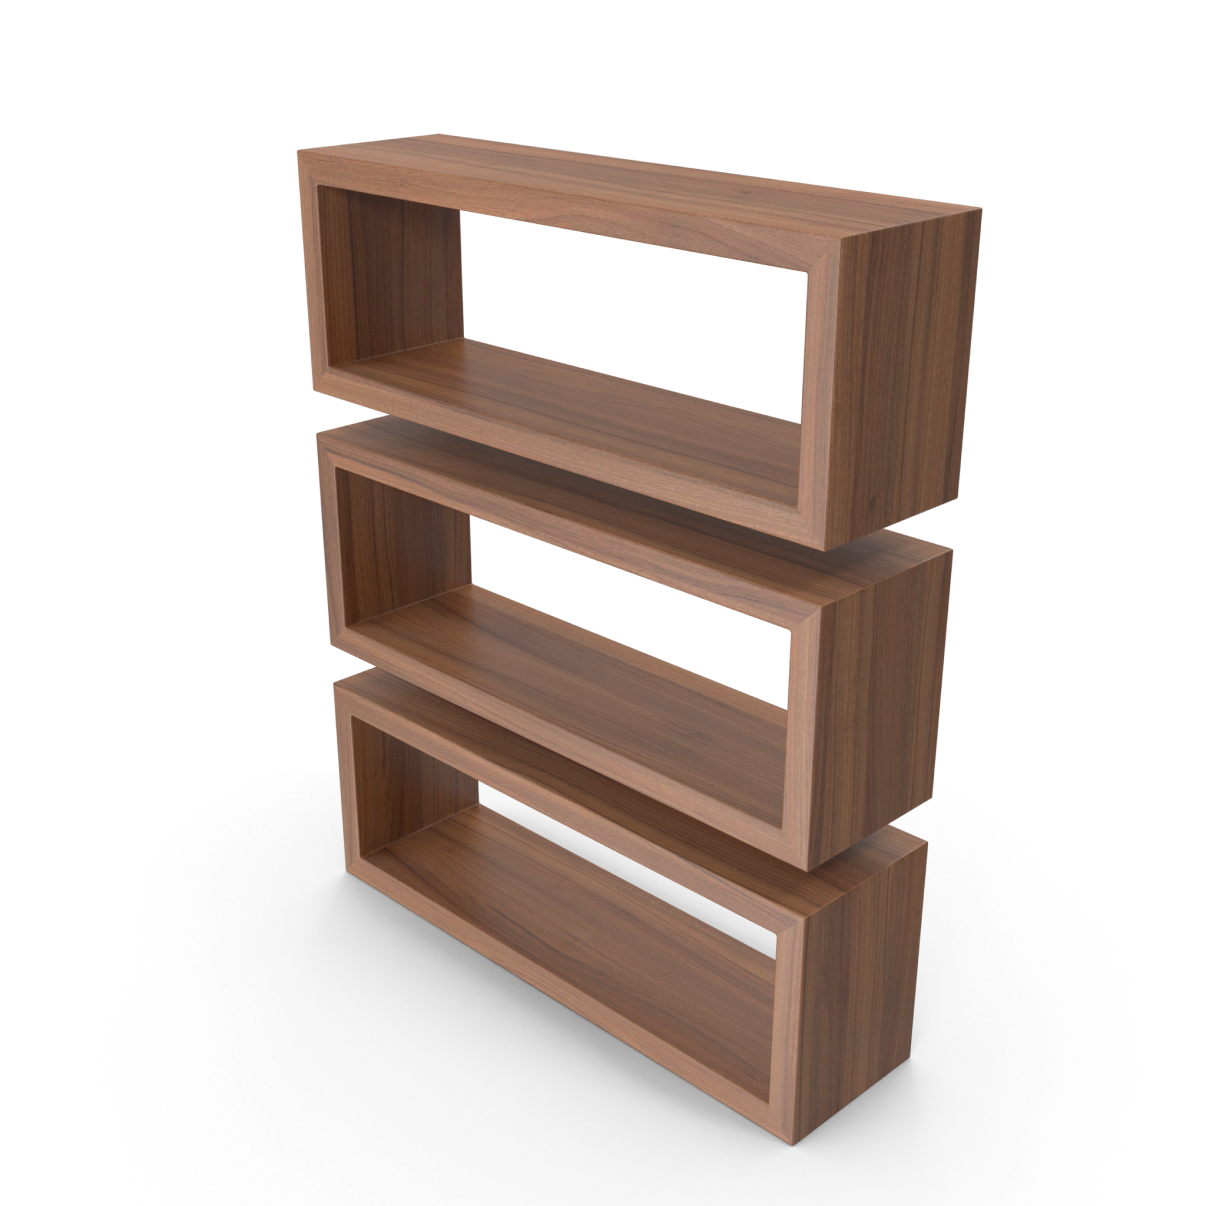 Stack shelves